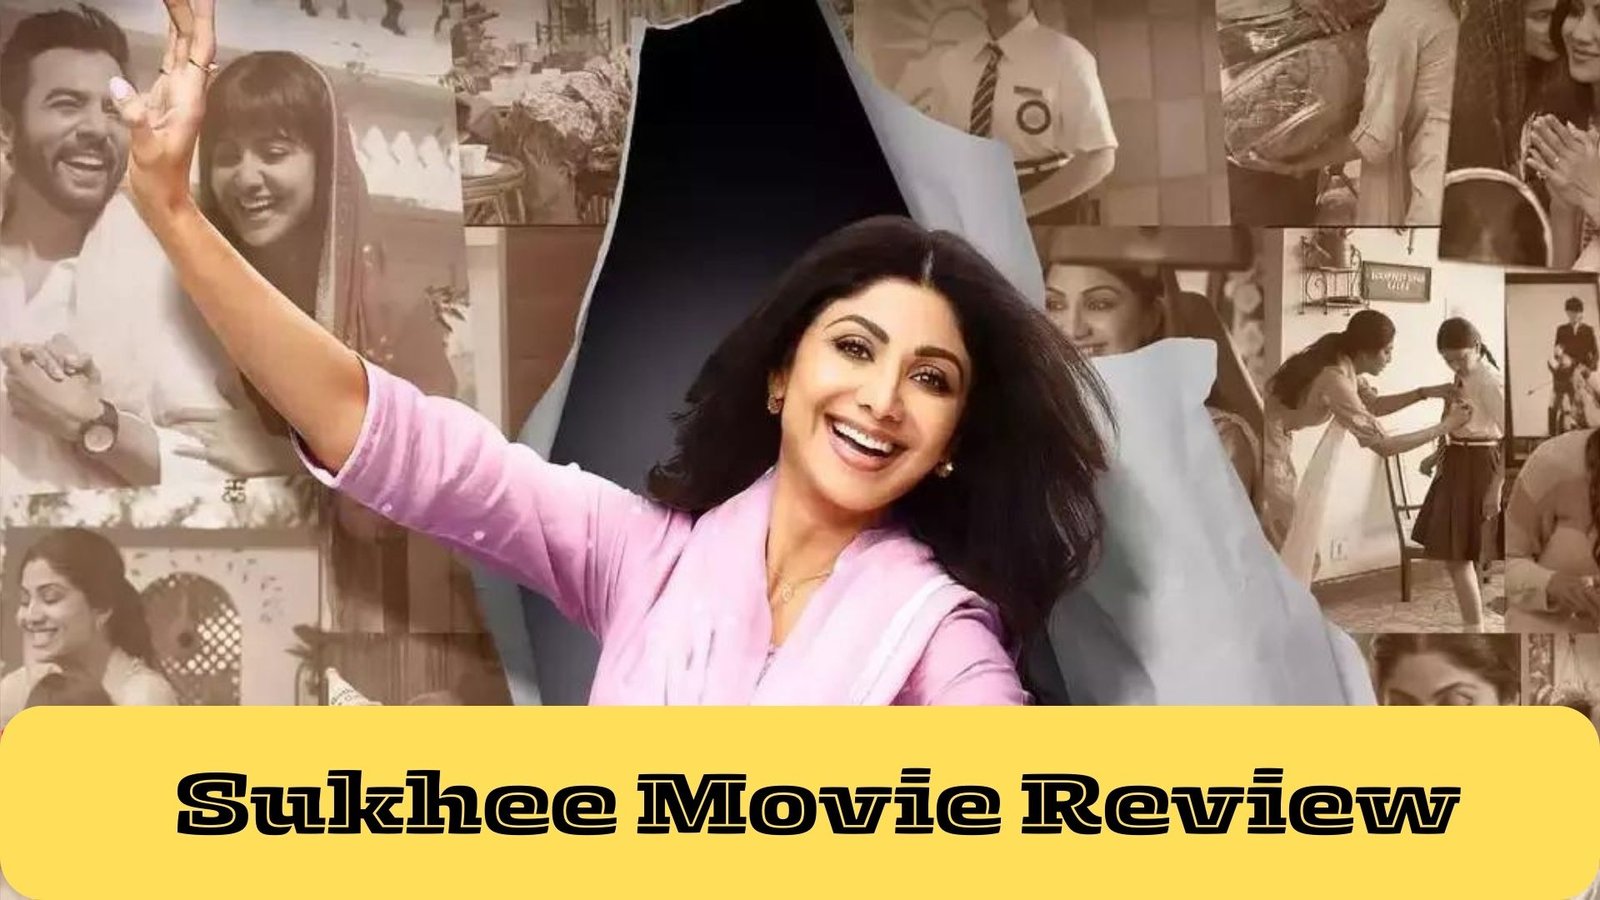 Sukhee movie review